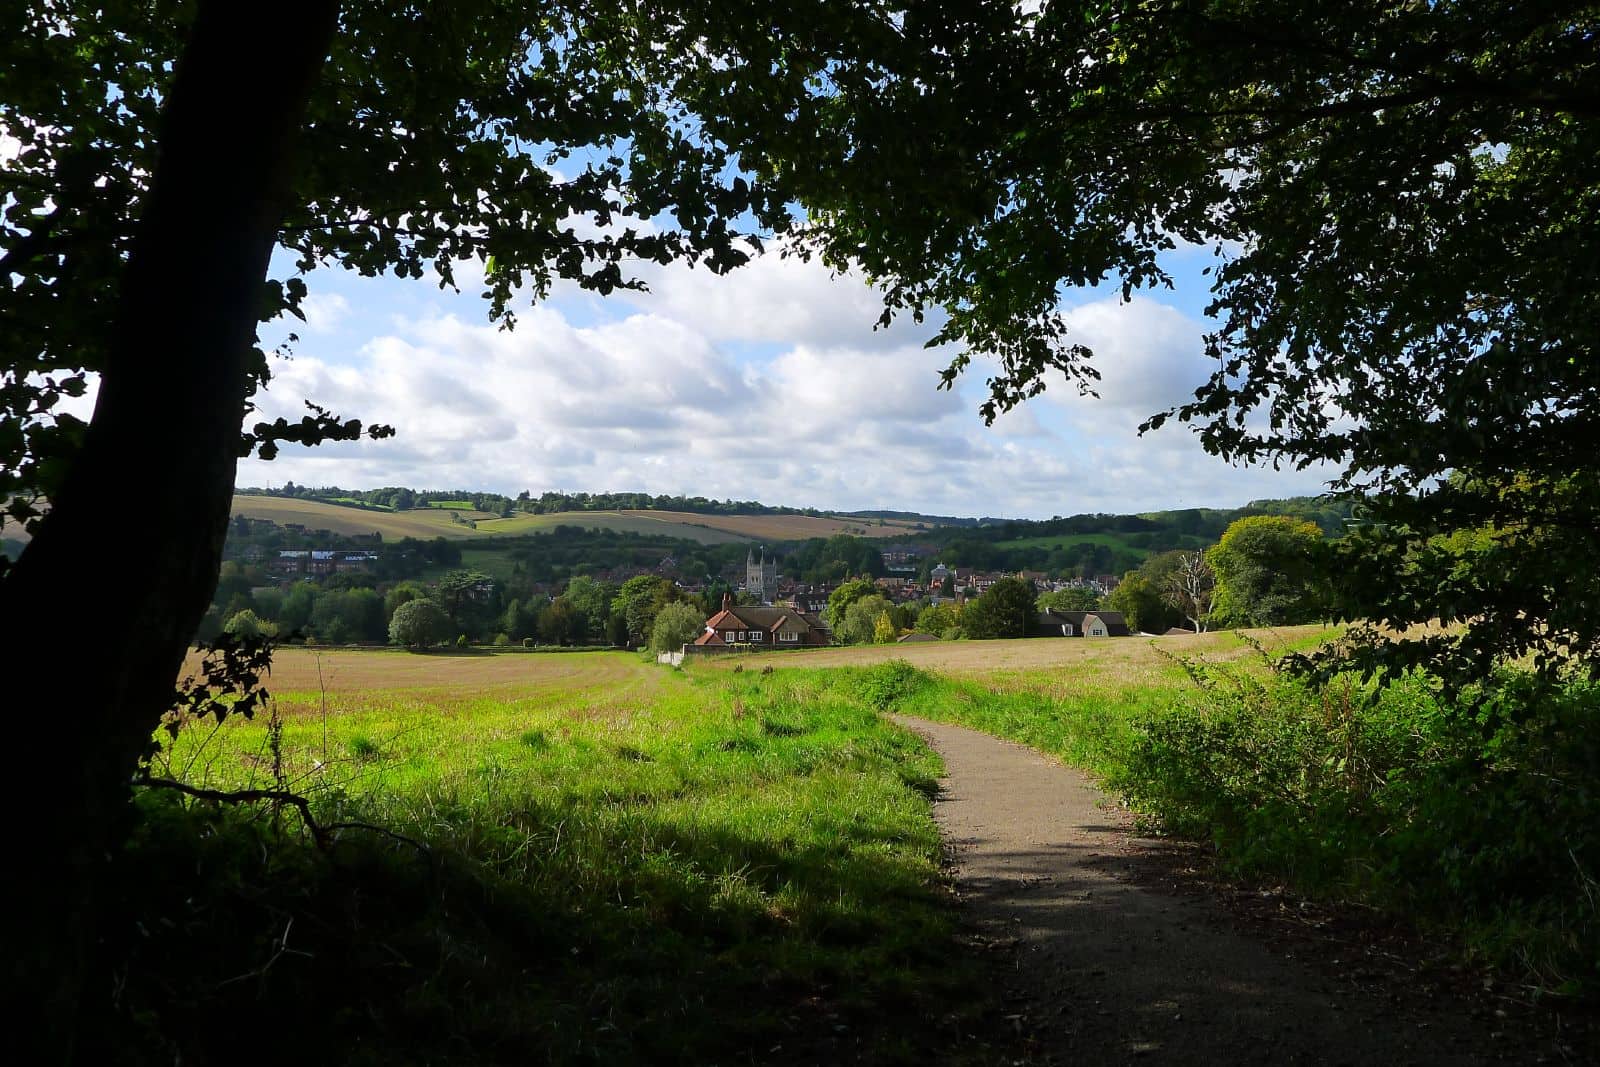 Scene of English countryside 